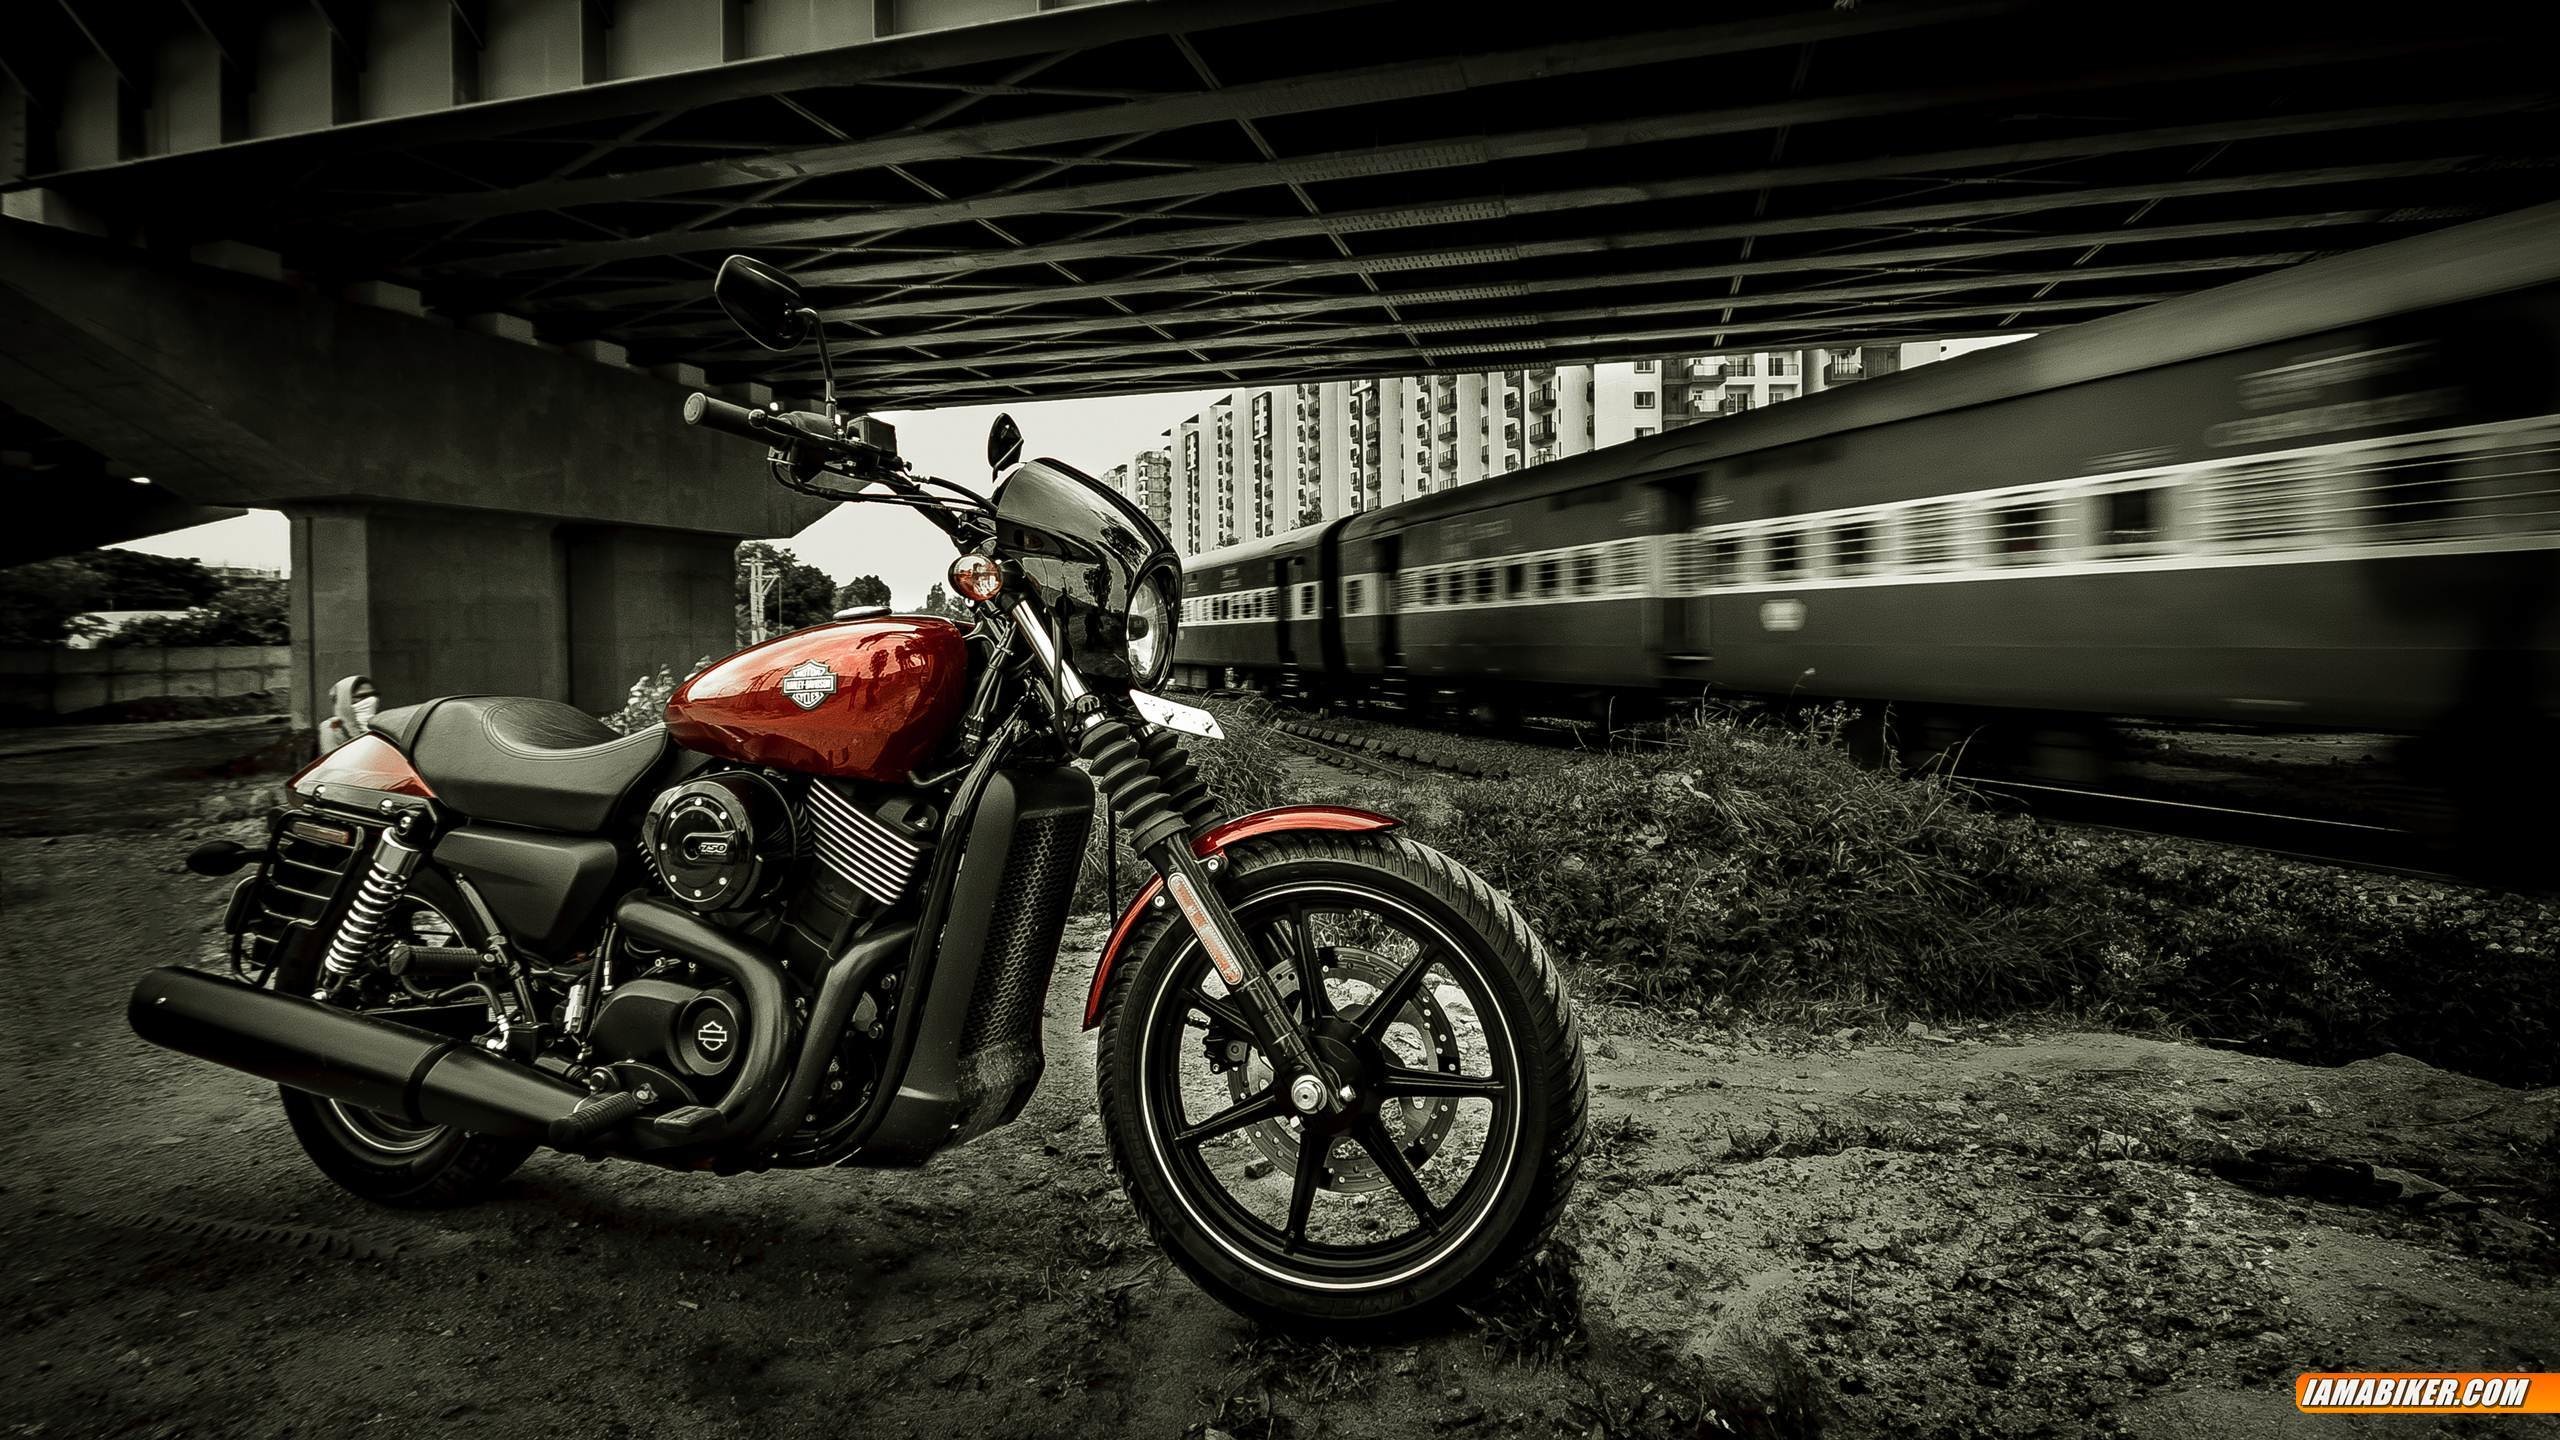 2560x1440 Harley Davidson Street 750 HD wallpaper